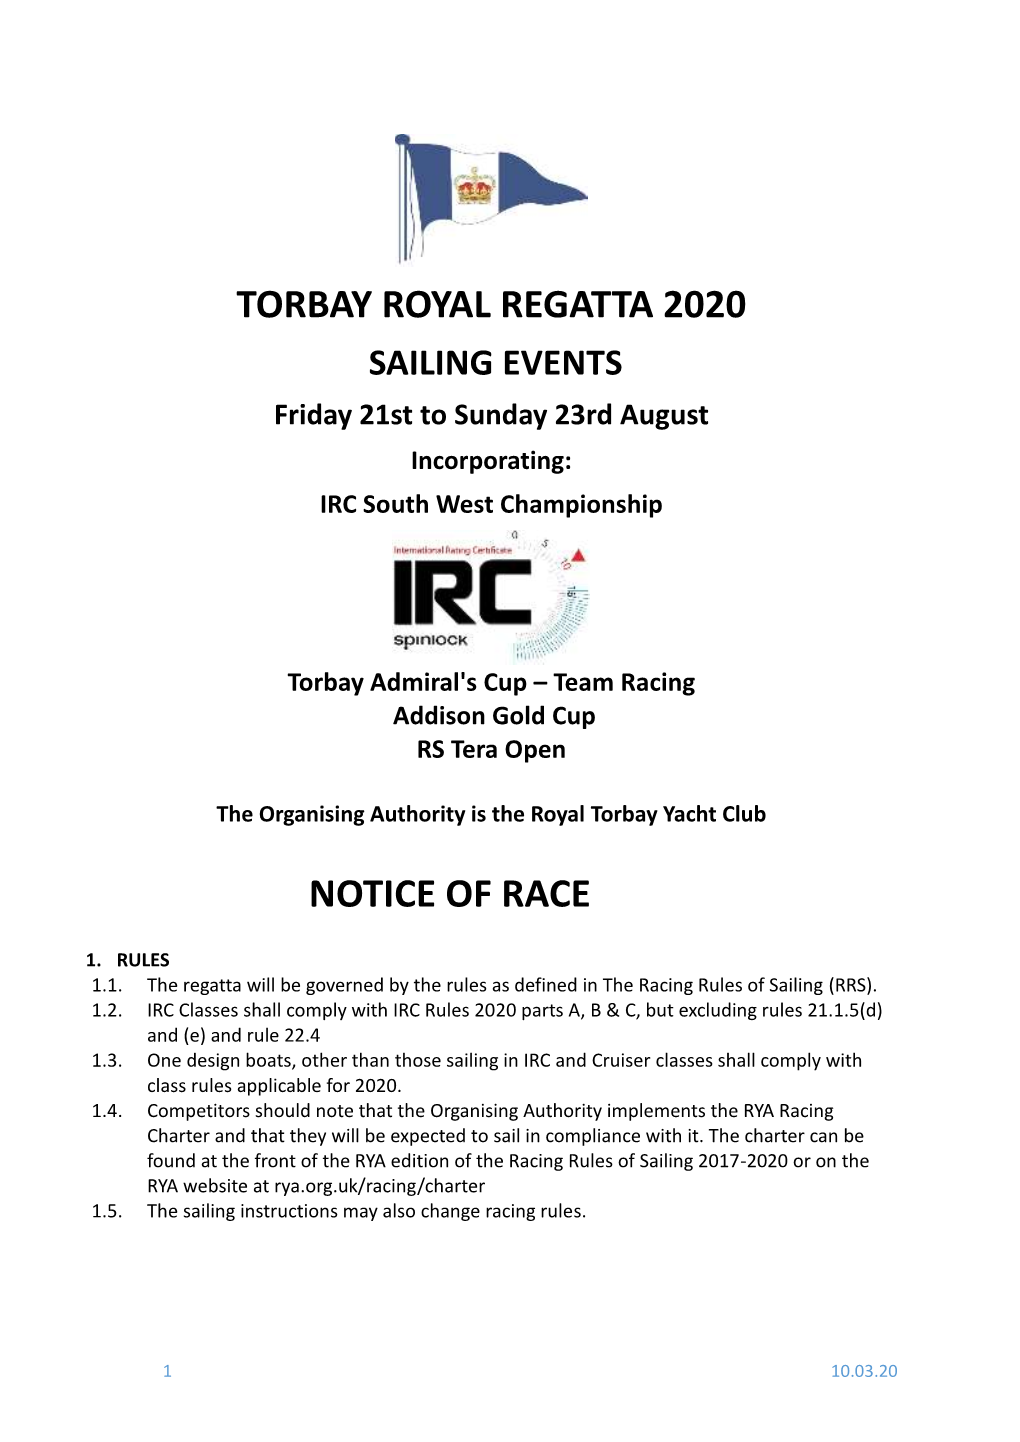 Torbay Royal Regatta 2020 Notice of Race